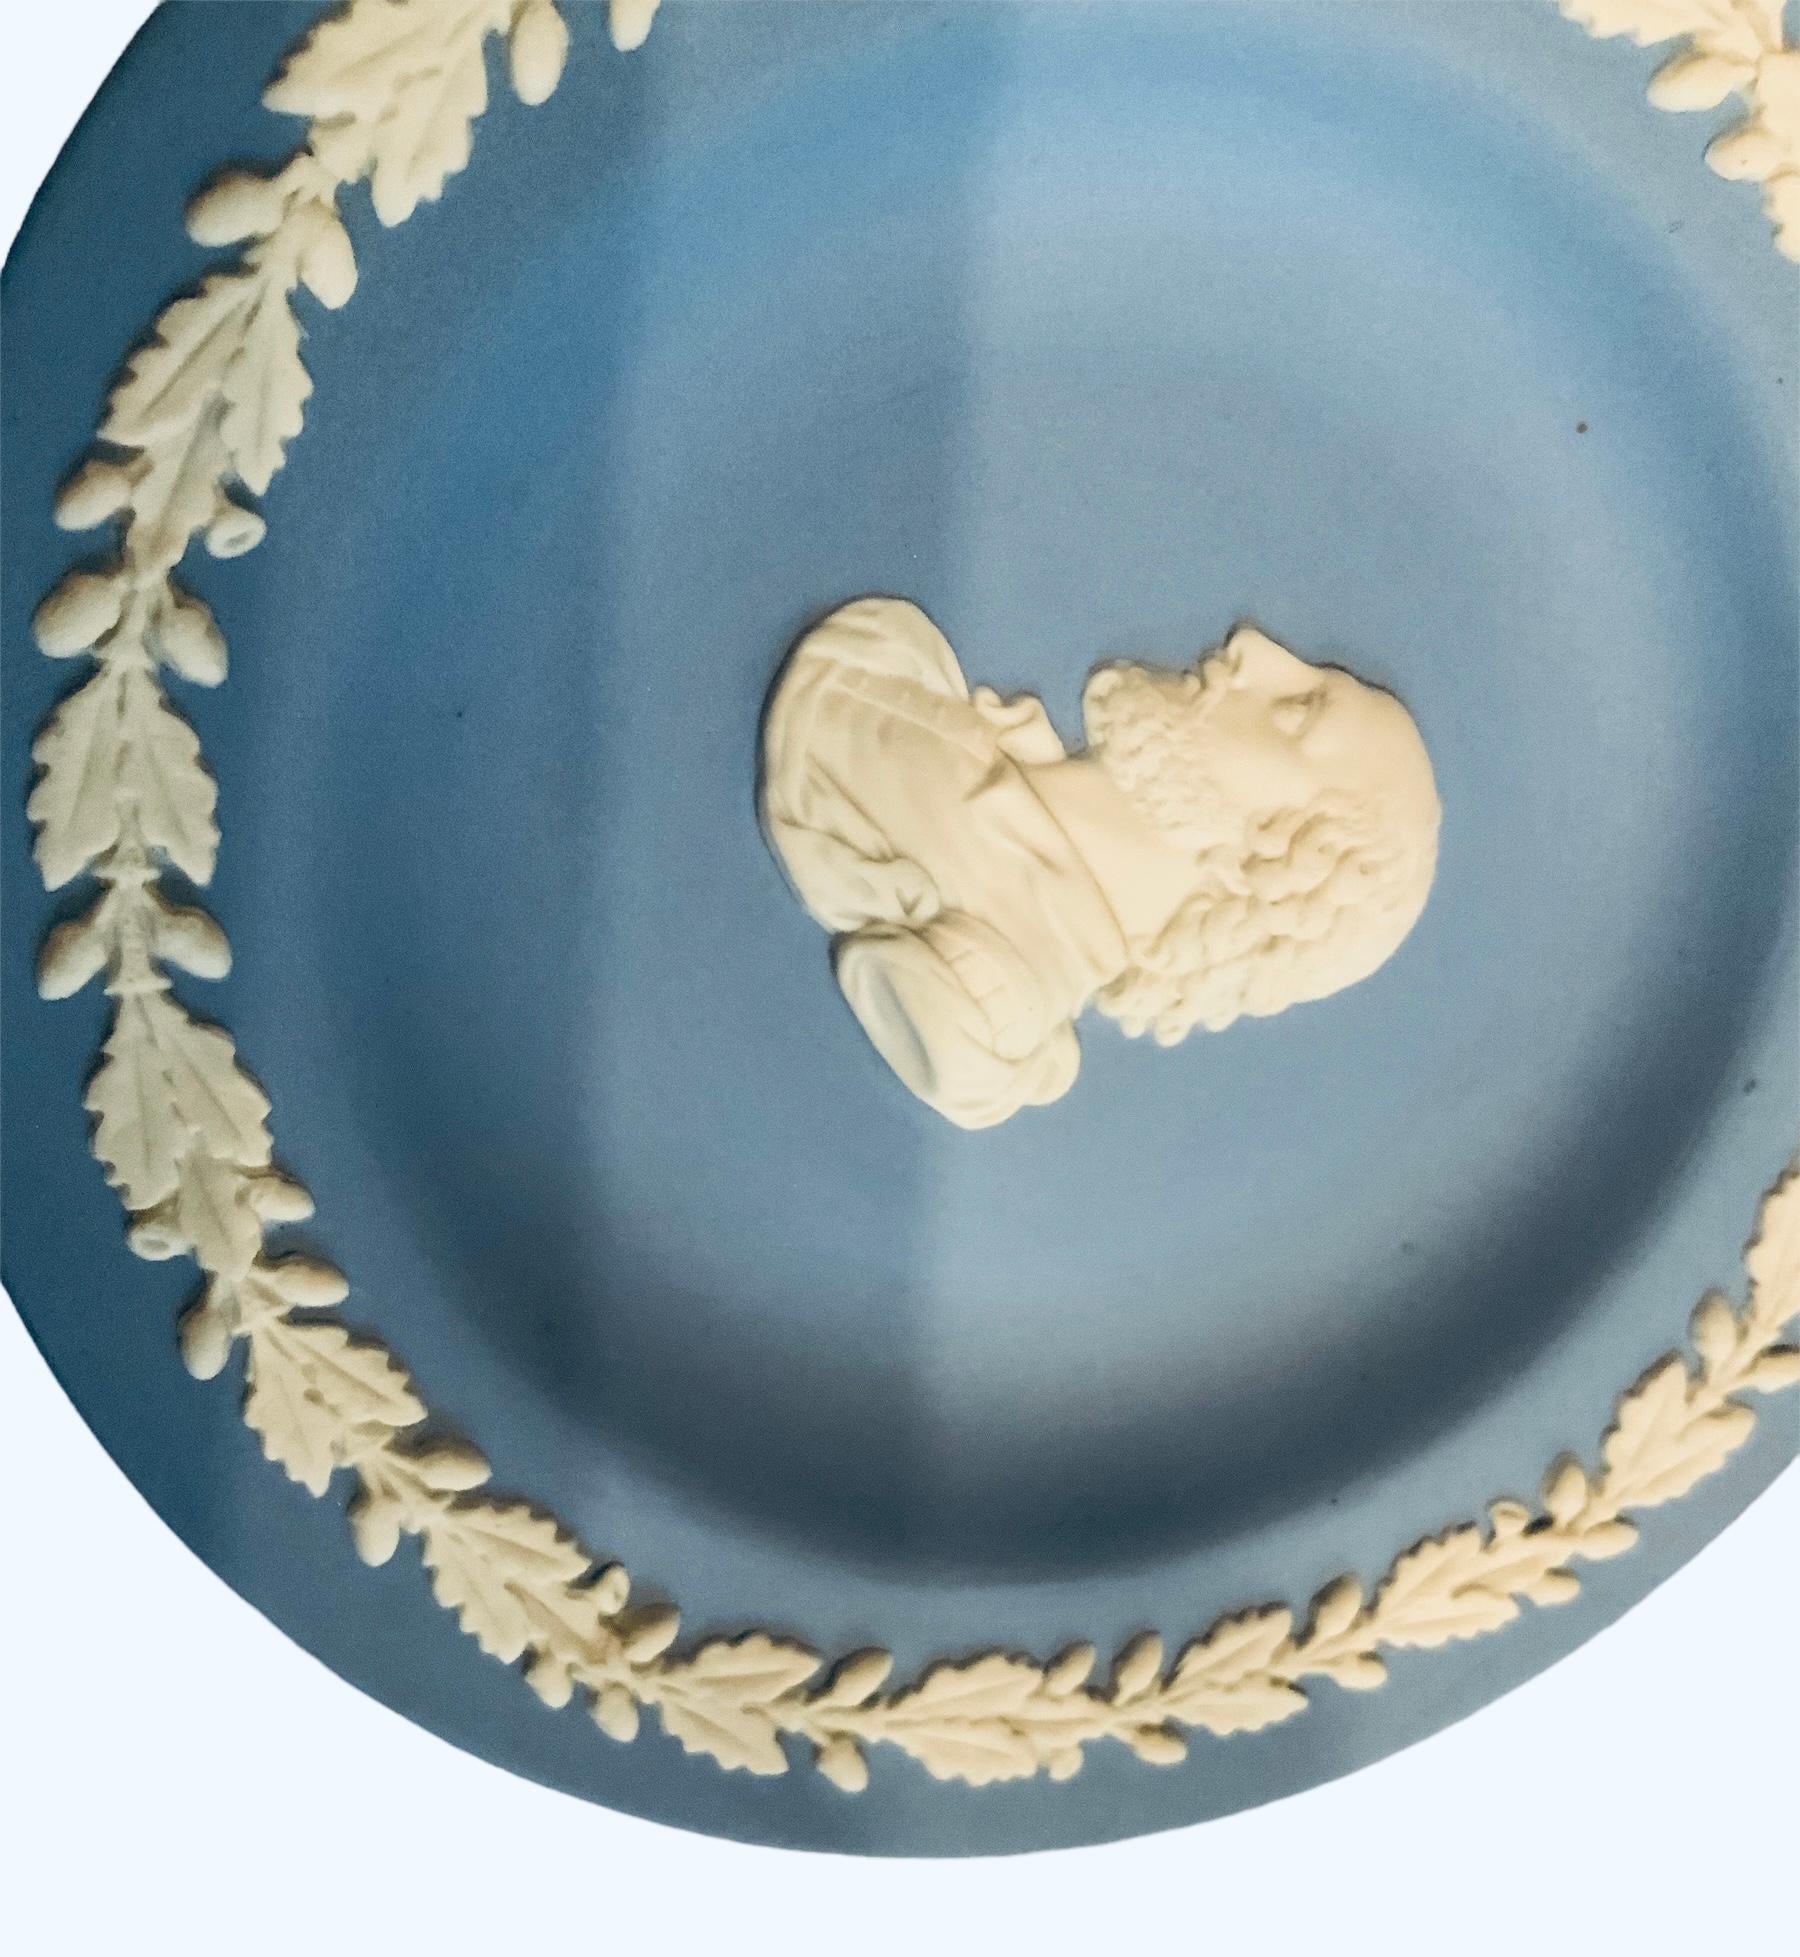 Porcelain Blue Wedgwood Jasperware Small Plate For Sale